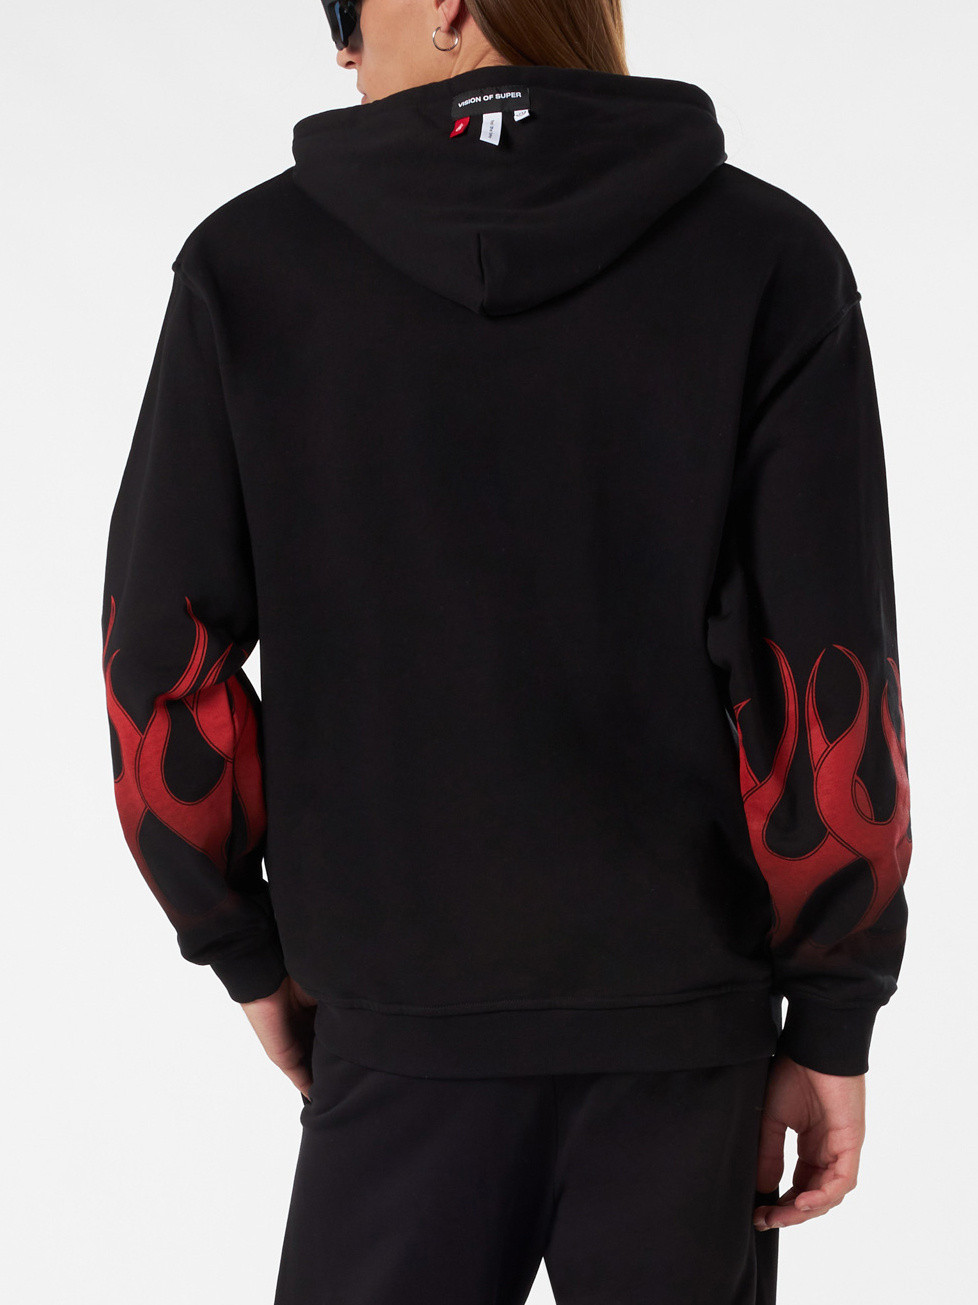 Vision of Super - Sweatshirt with racing flames, Black, large image number 3